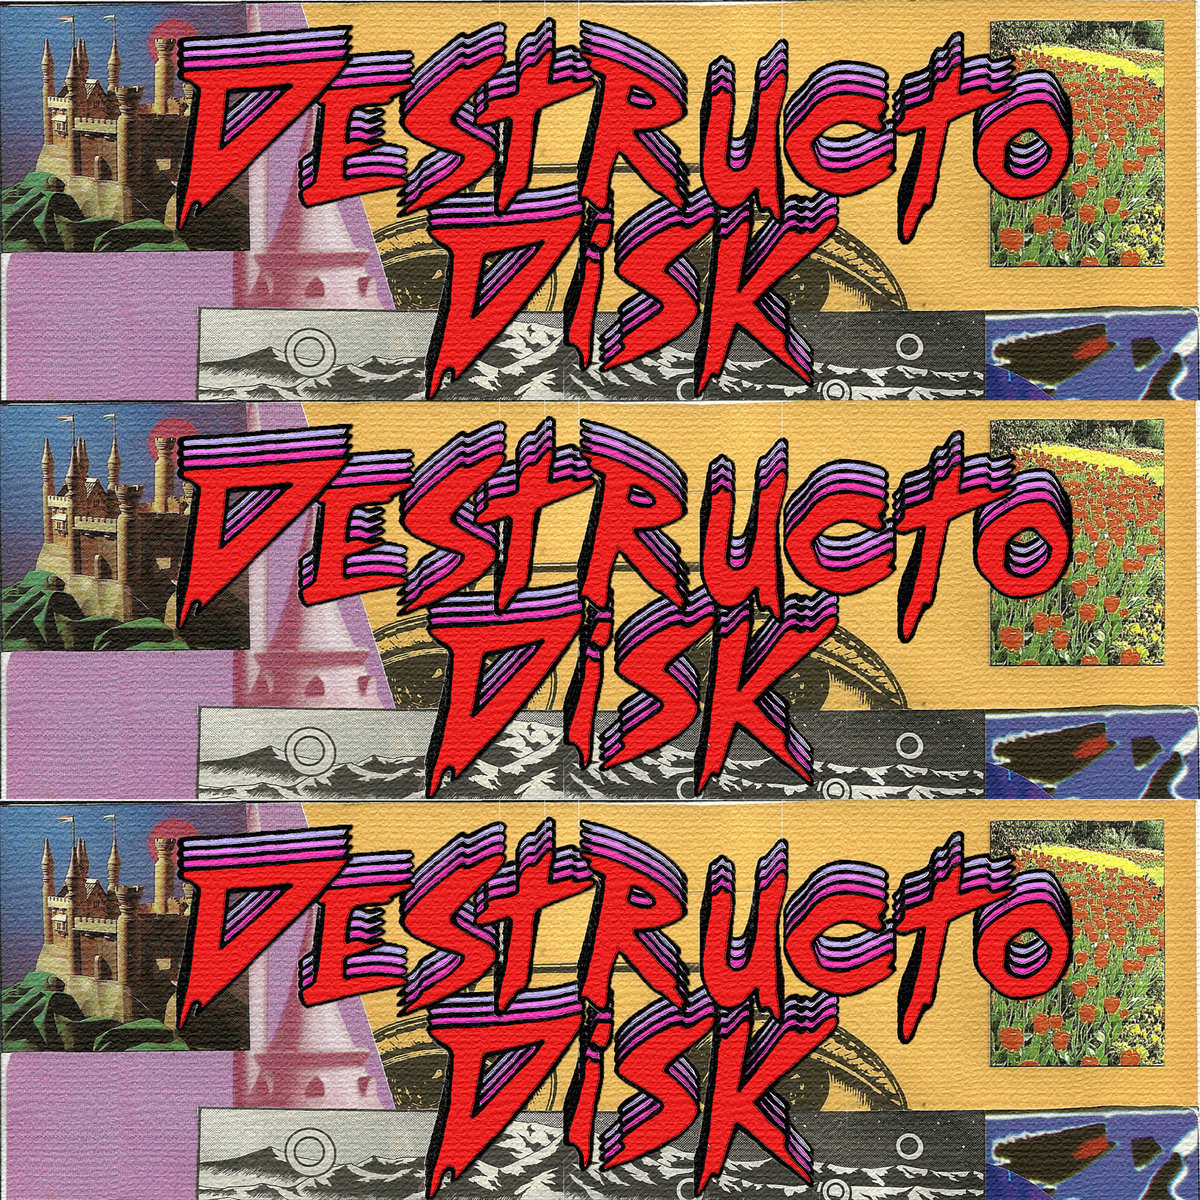 Destructo Disk — Cops / Dogs cover artwork